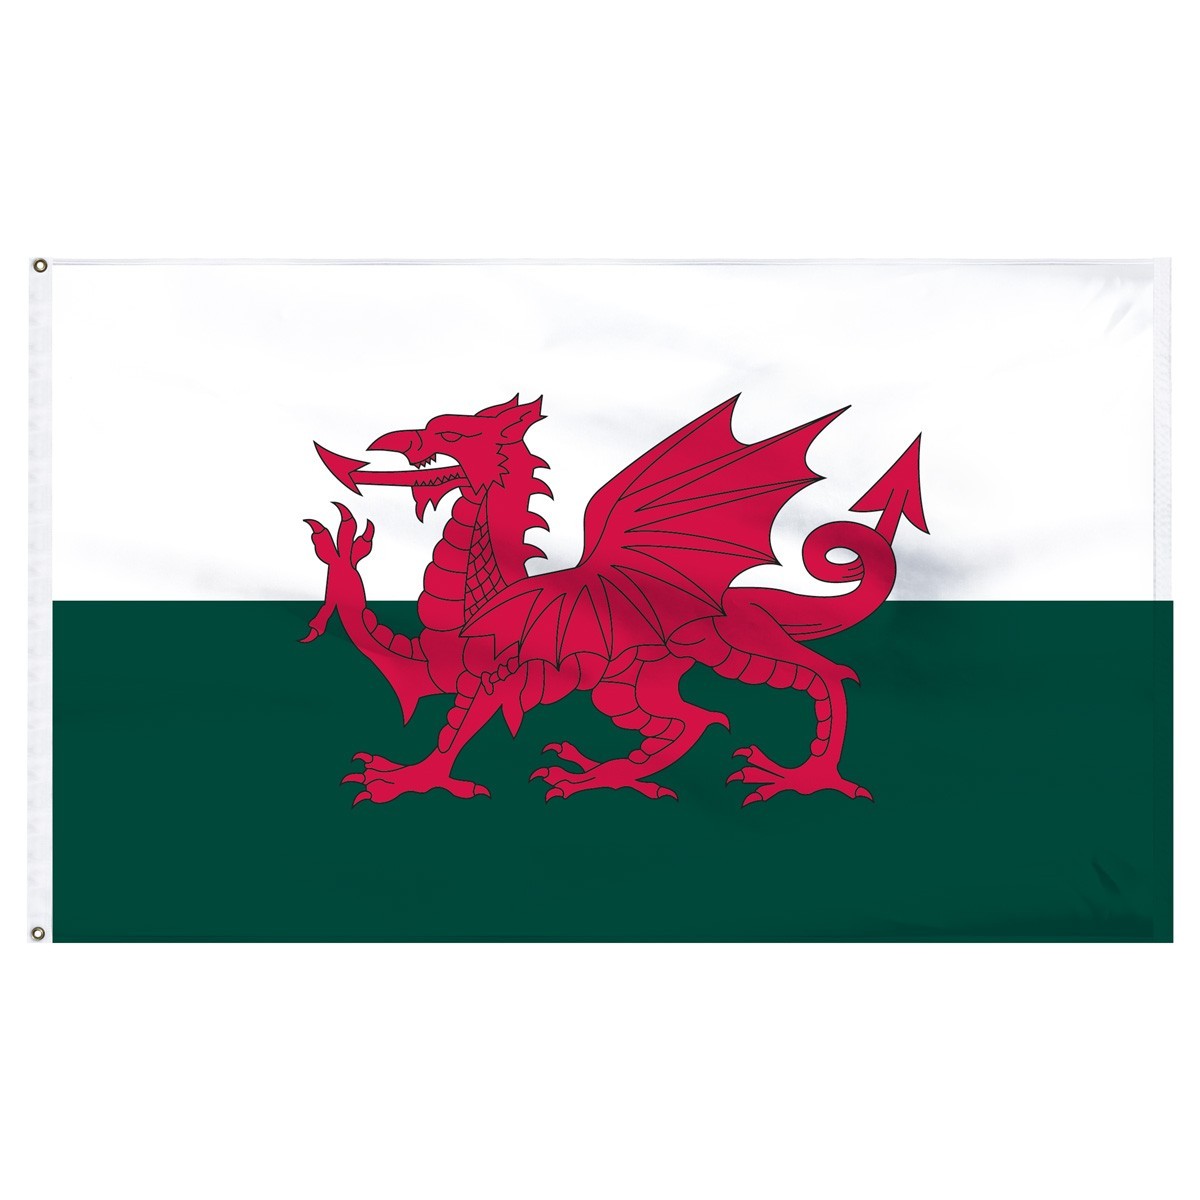 Bandera de nailon para exteriores de Gales de 4 pies x 6 pies